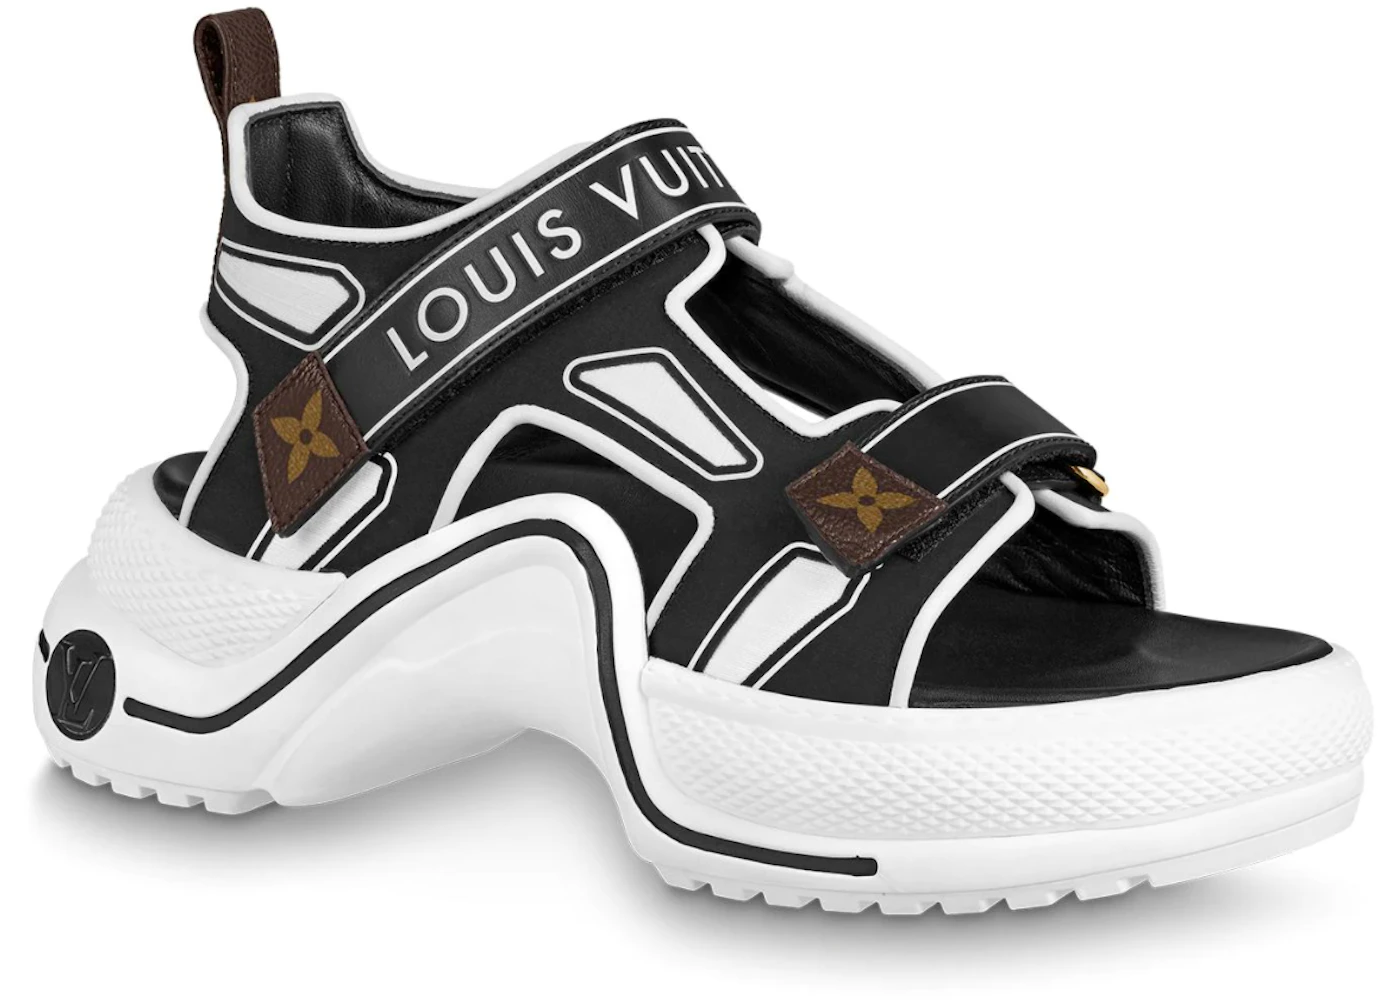 Louis Vuitton Archlight Sandal Black White (Women's) - 1A7U60 - TW